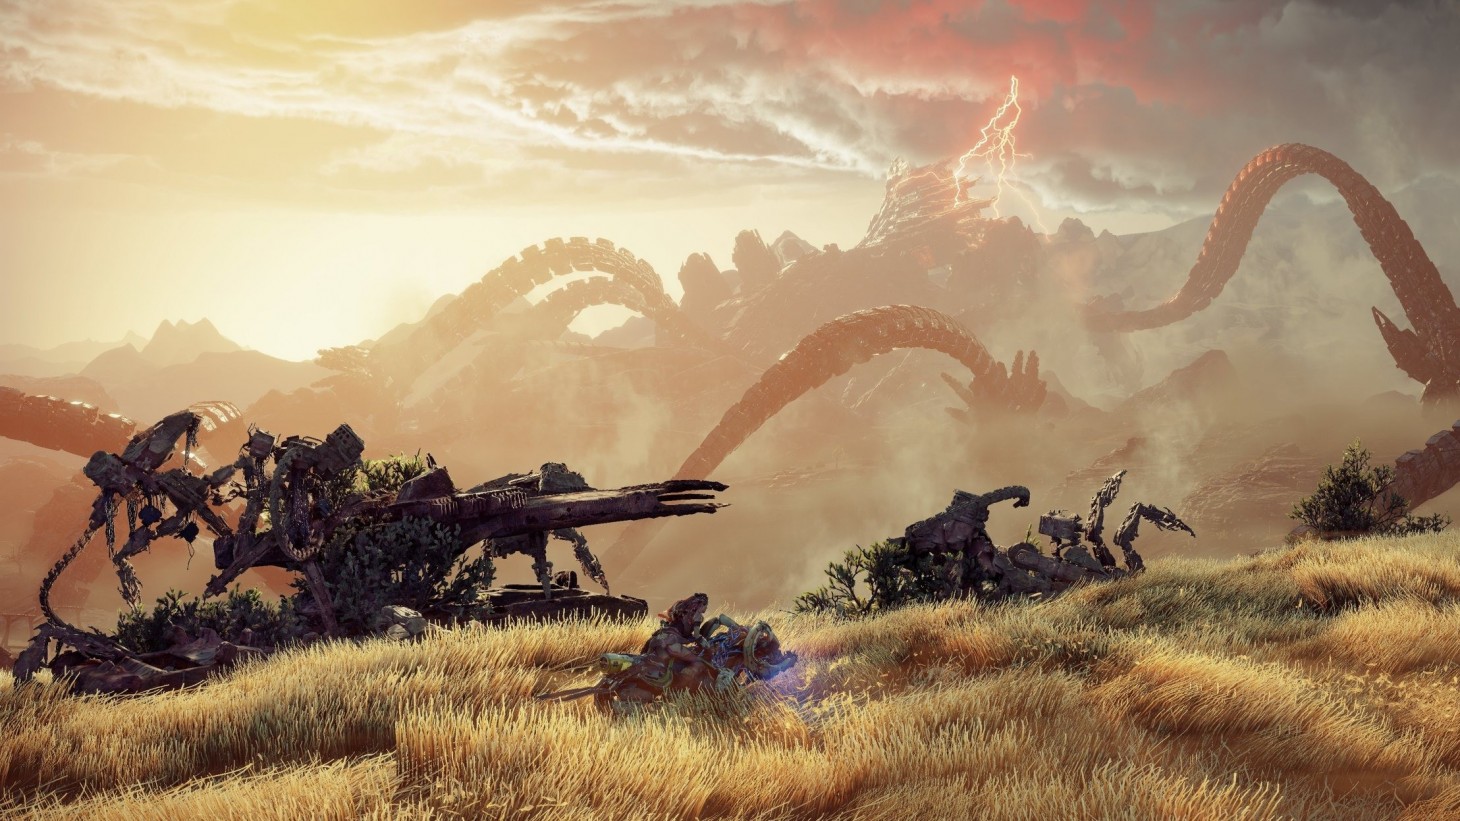 Guerrilla Shares Images Of Horizon Forbidden West Running On PlayStation 4  - Game Informer